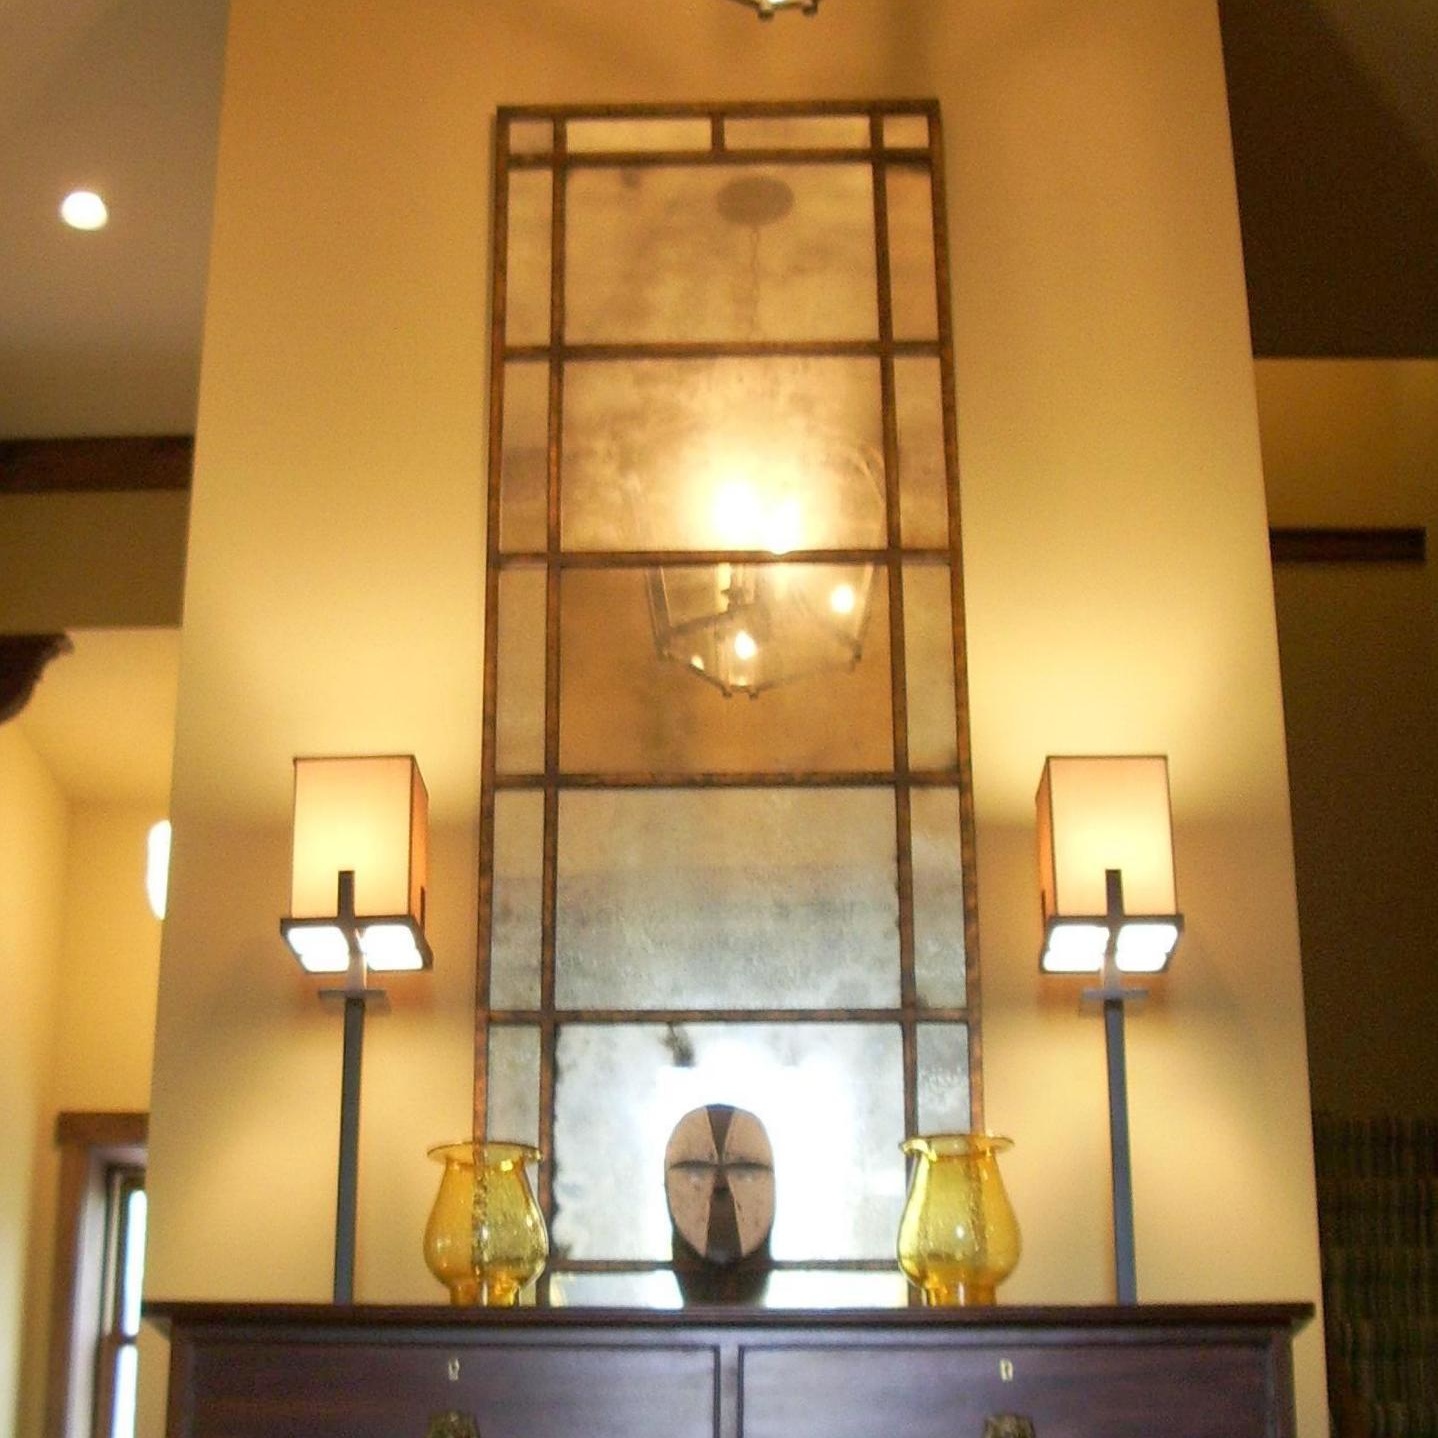 Decorative dresser with large mirror